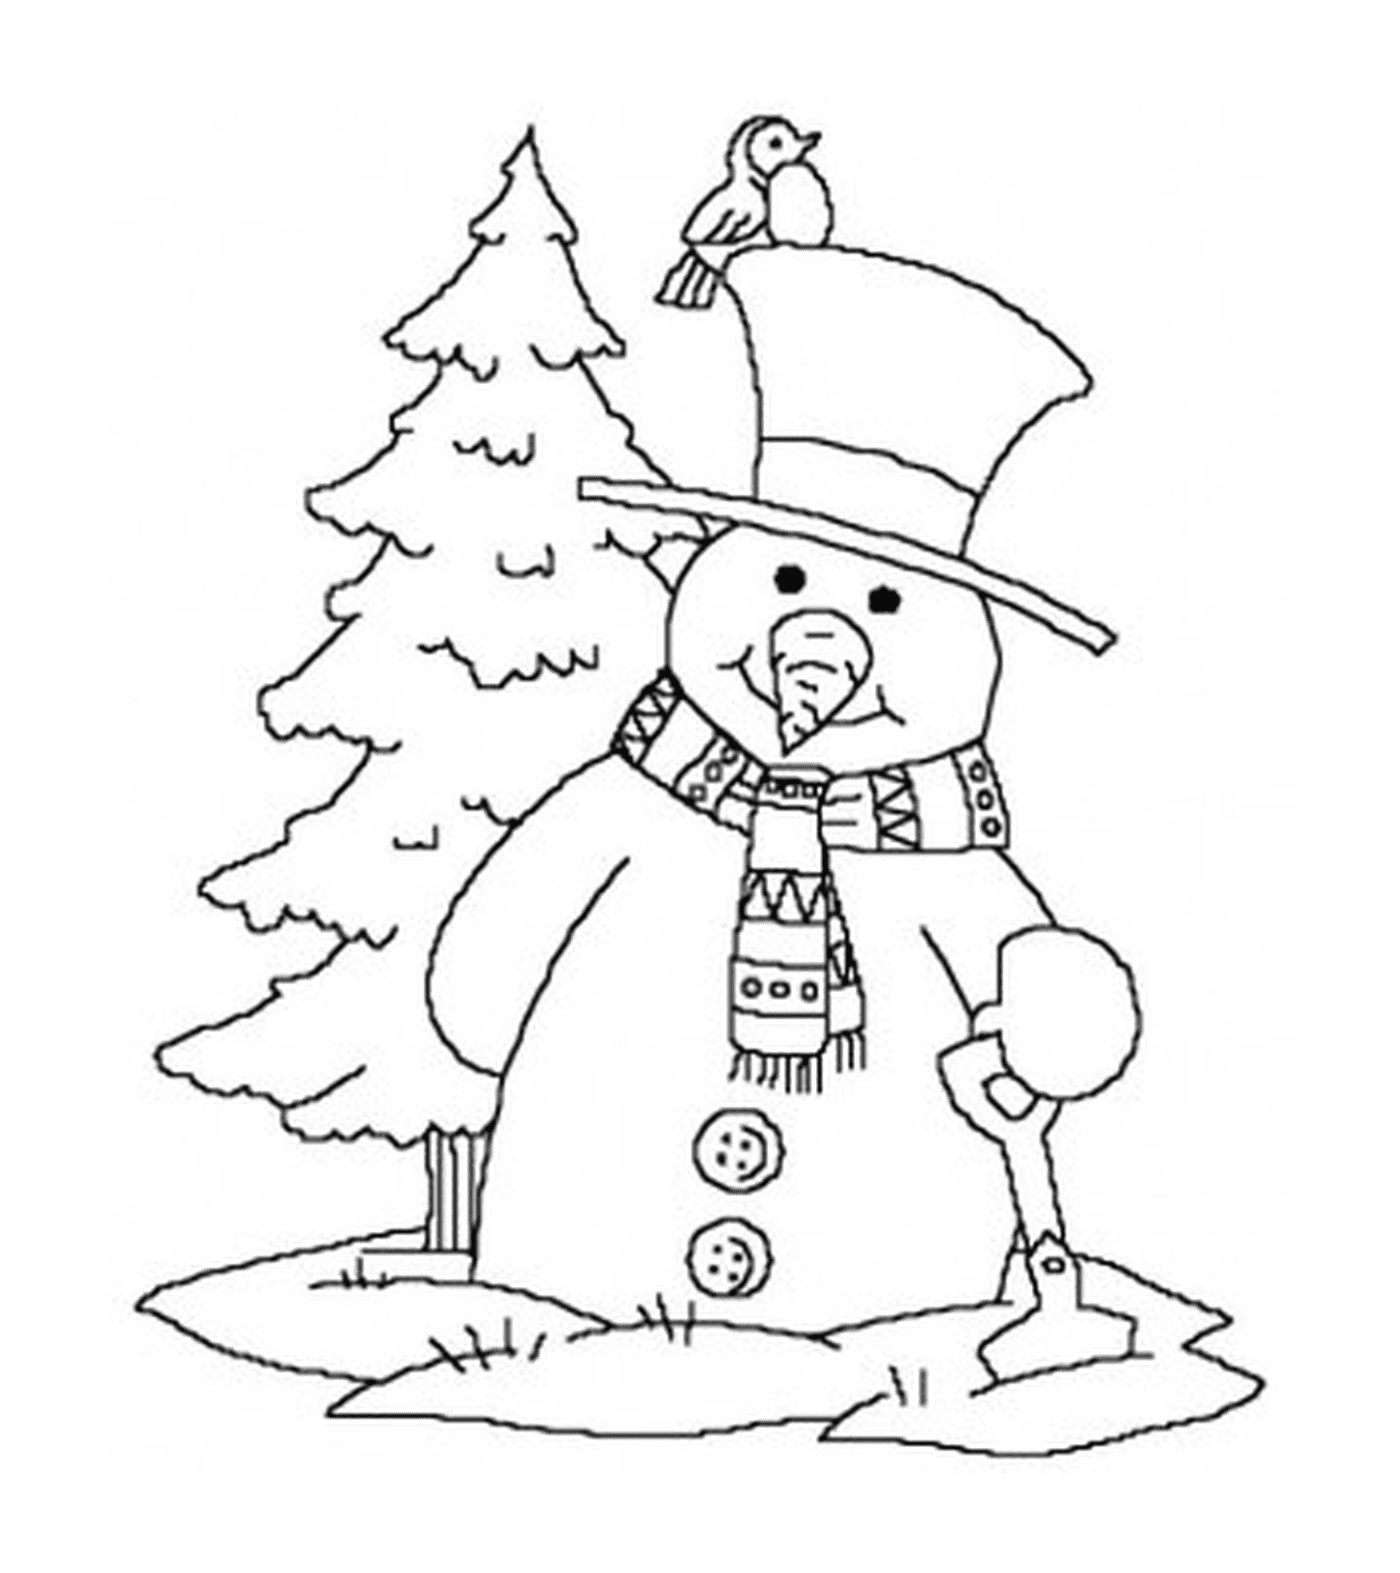  Hombre de nieve junto a un árbol 